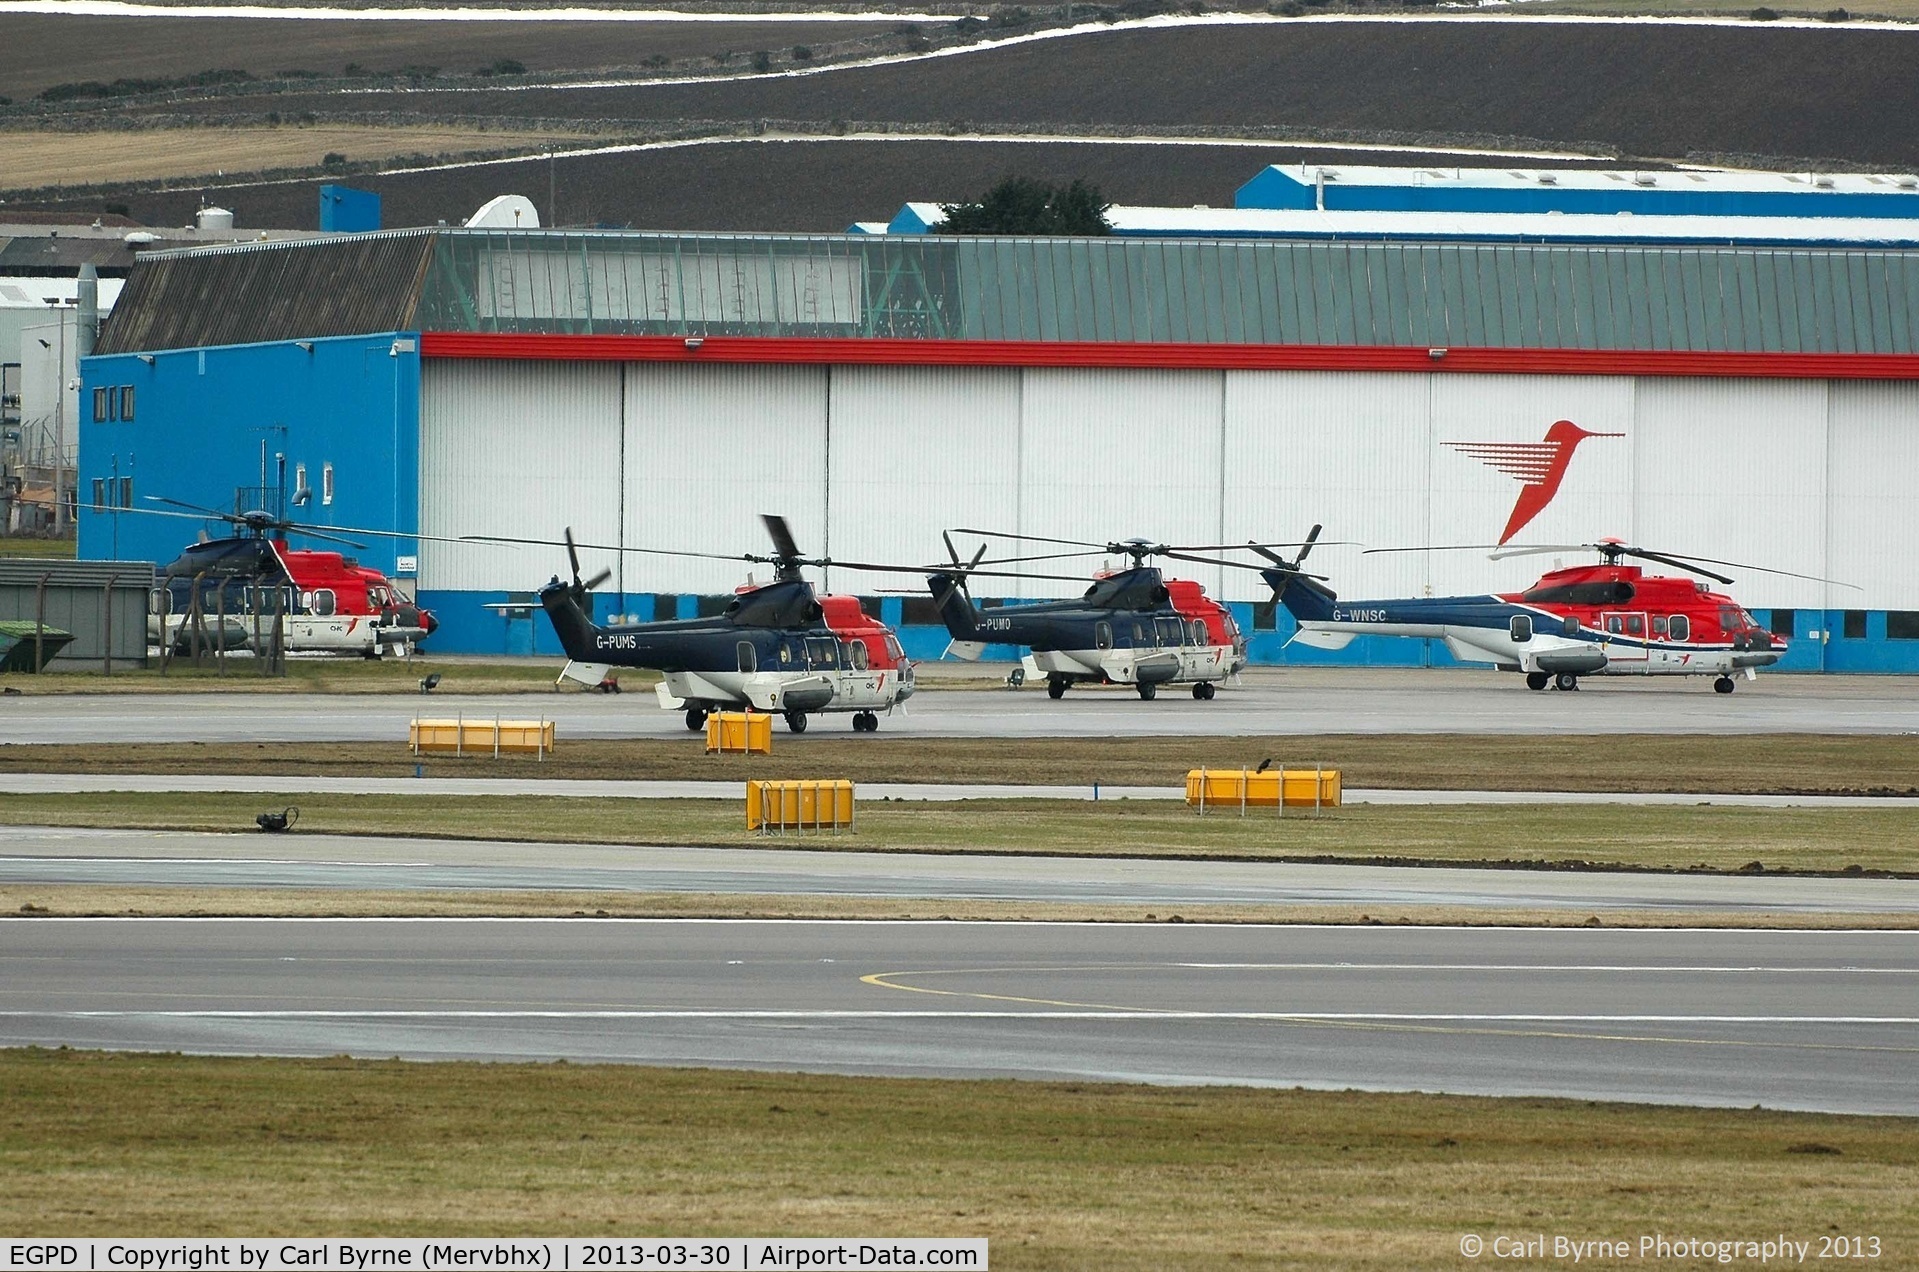 Aberdeen Airport, Aberdeen, Scotland United Kingdom (EGPD) - Some of CHC Scotia's fleet outside their hangar.